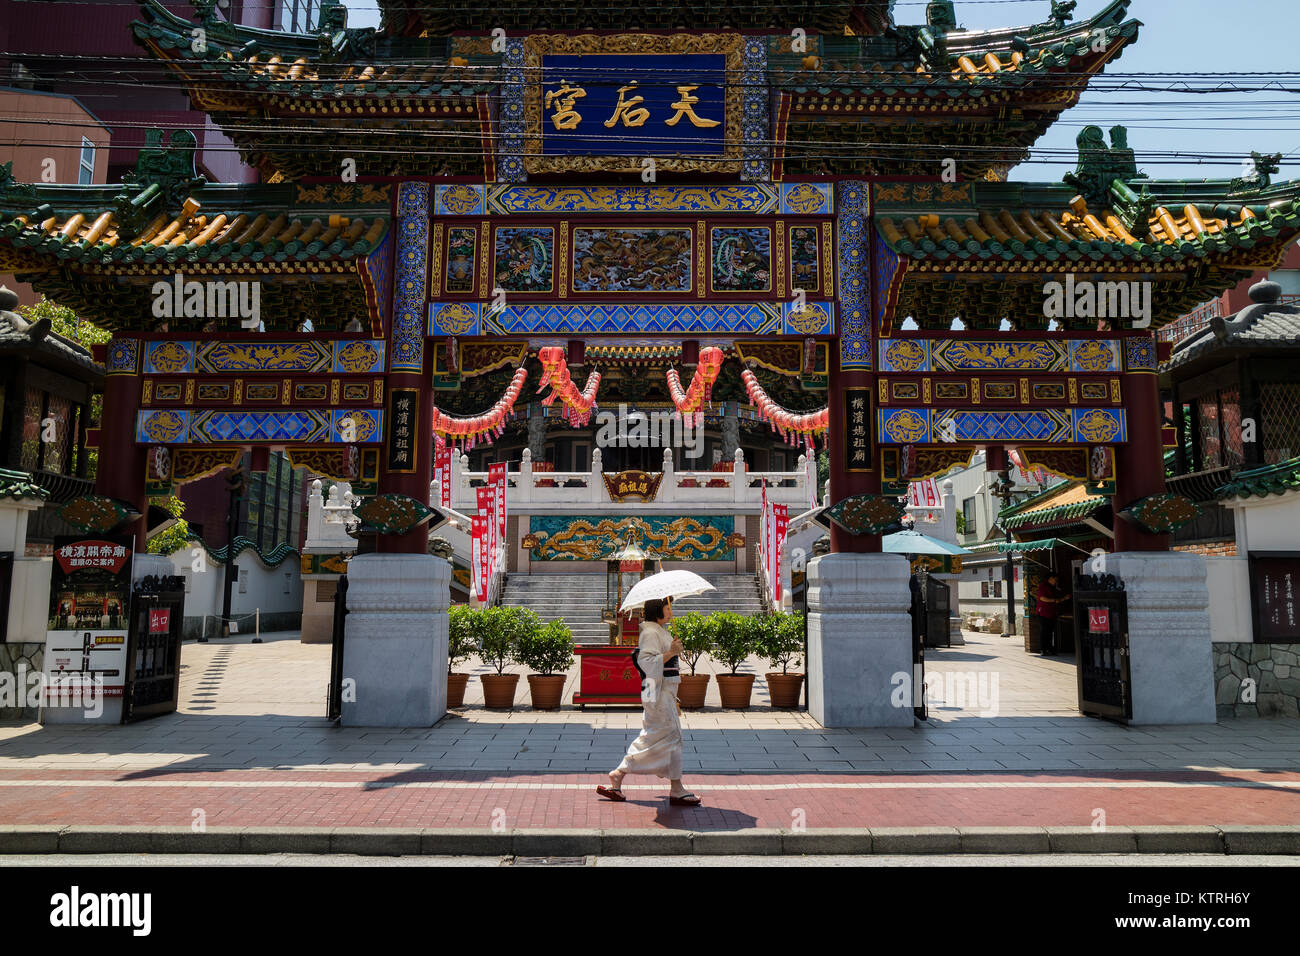 Yokohama - Japan, June 16, 2017; Chinese Mazu Miao Temple in China town in Yokohama city, Mazu, the Goddess of the Sea is worshipped at the Mazu Templ Stock Photo